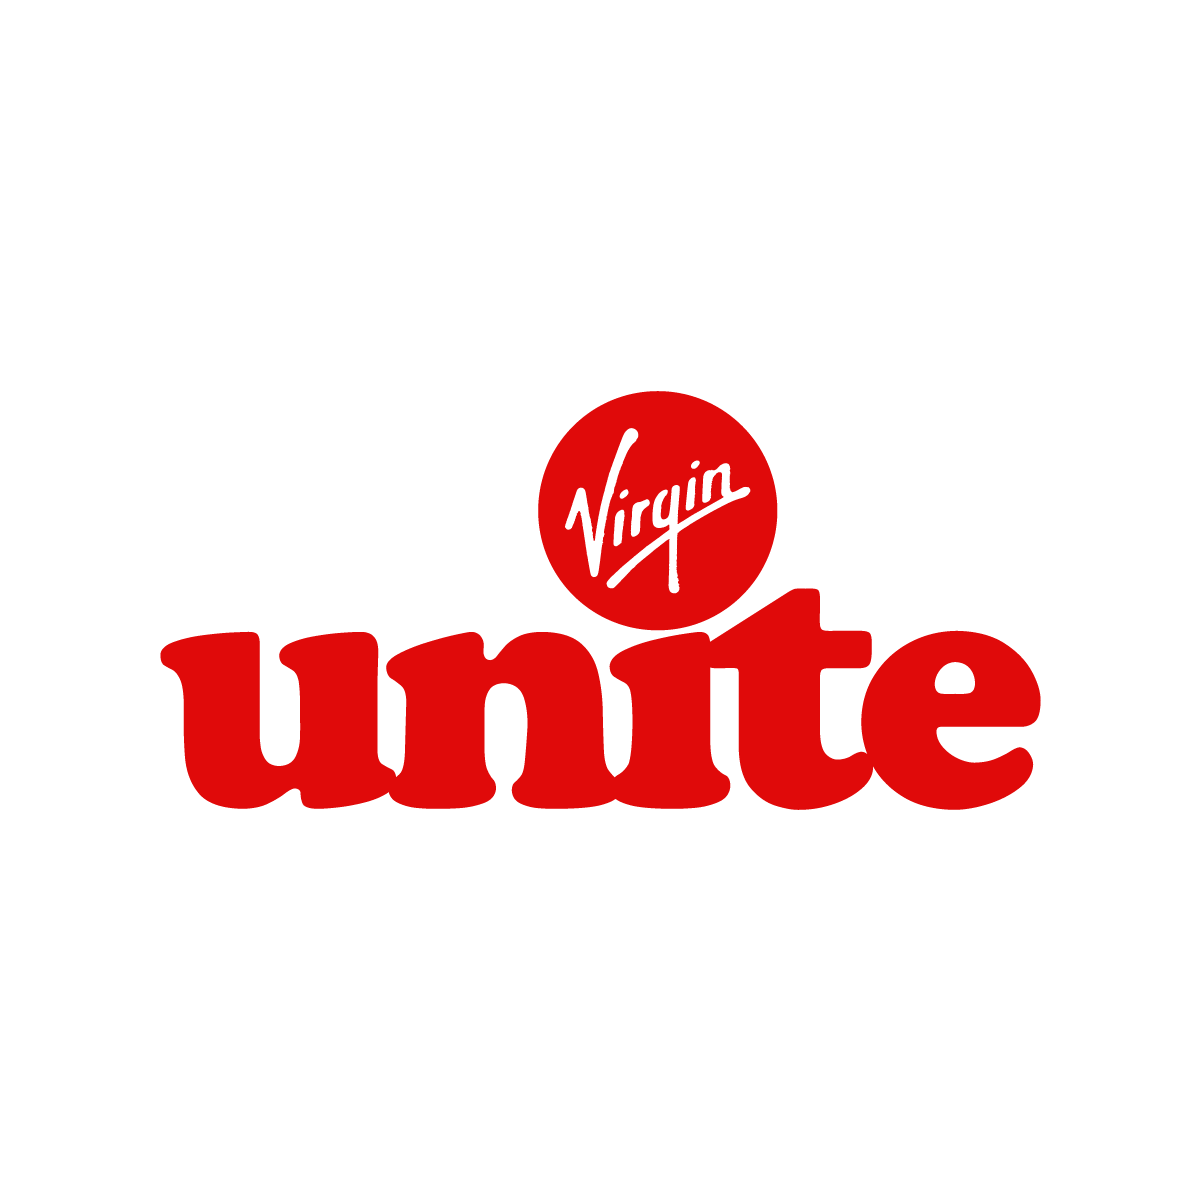 The Virgin Unite logo